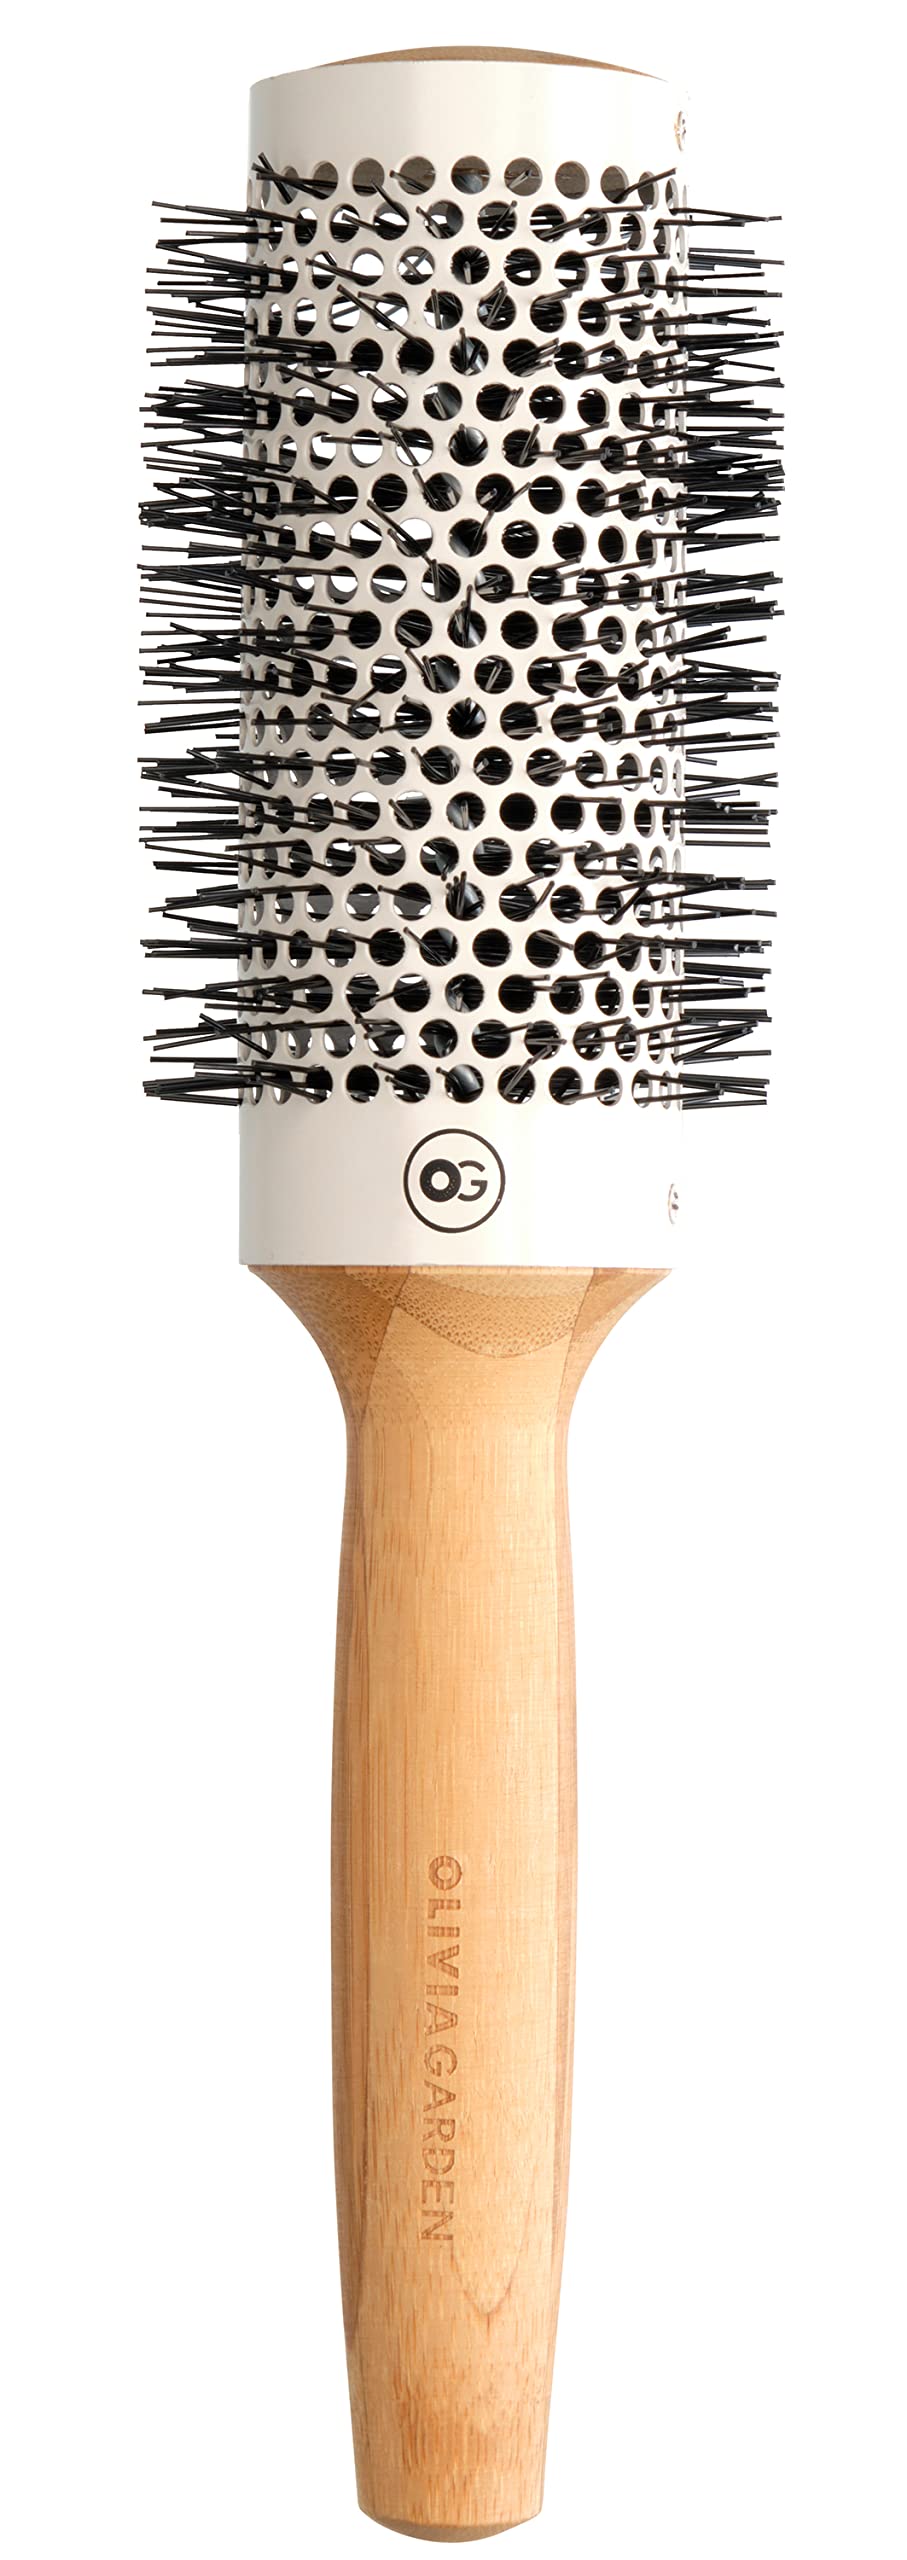 Populaire Olivia Garden Healthy Hair Brosse Ronde Thermale en Bambou, Diamètre 43mm - Brosse Ecologique en Bambou RuYIrN96e frais